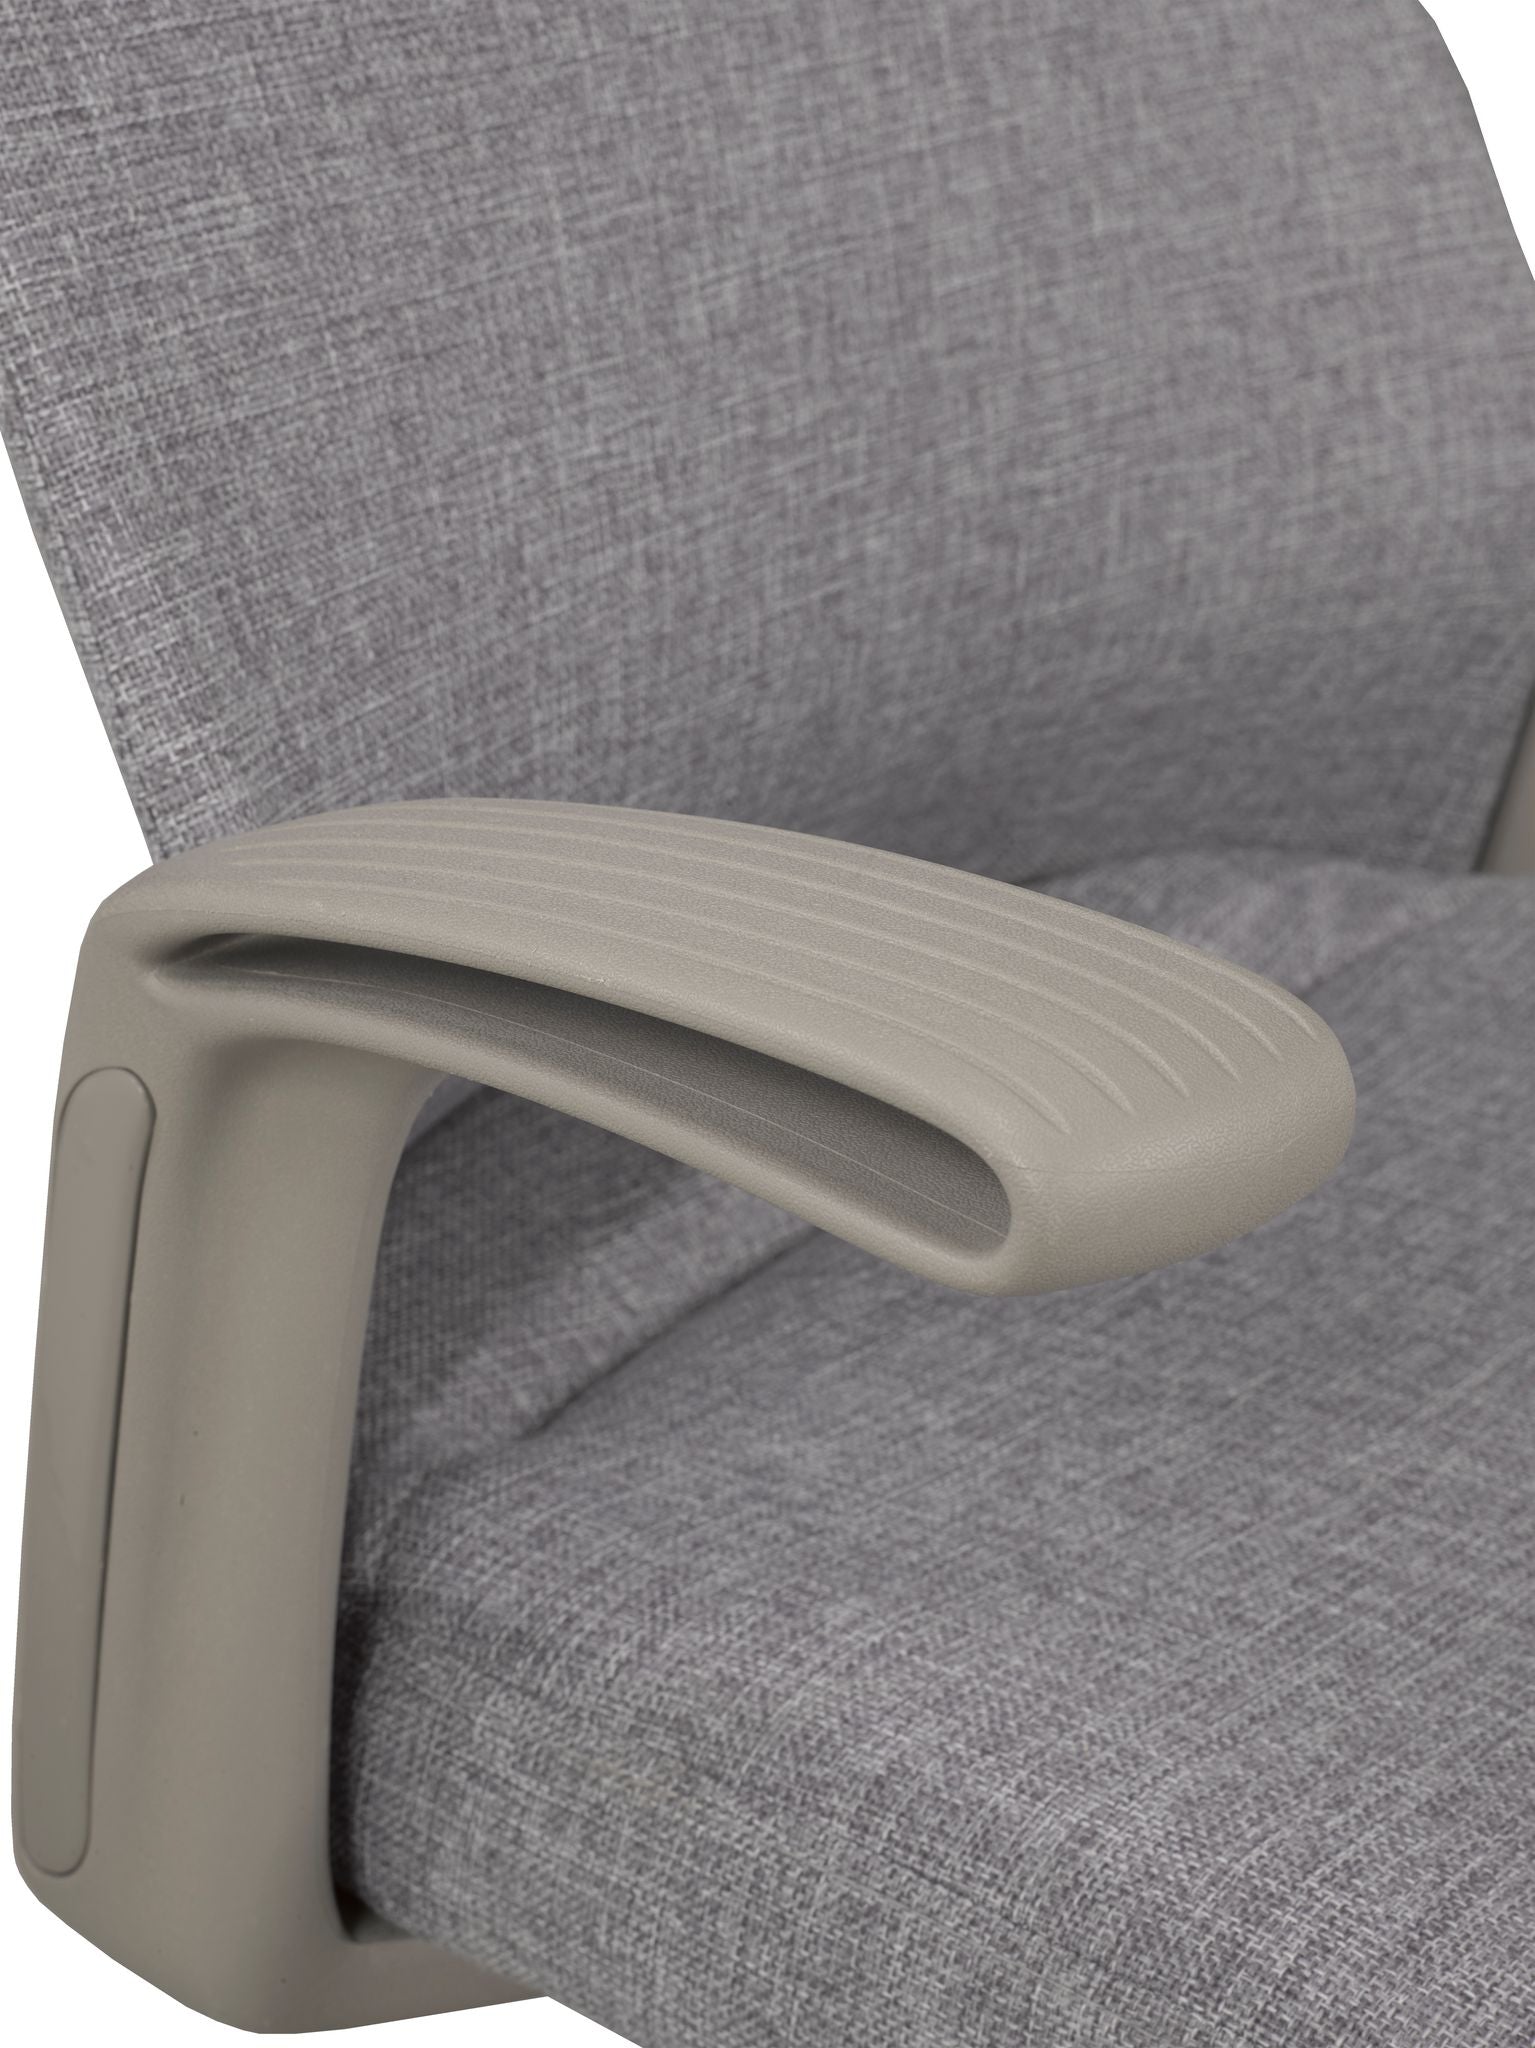 Grey Office Chair - 1217-GR